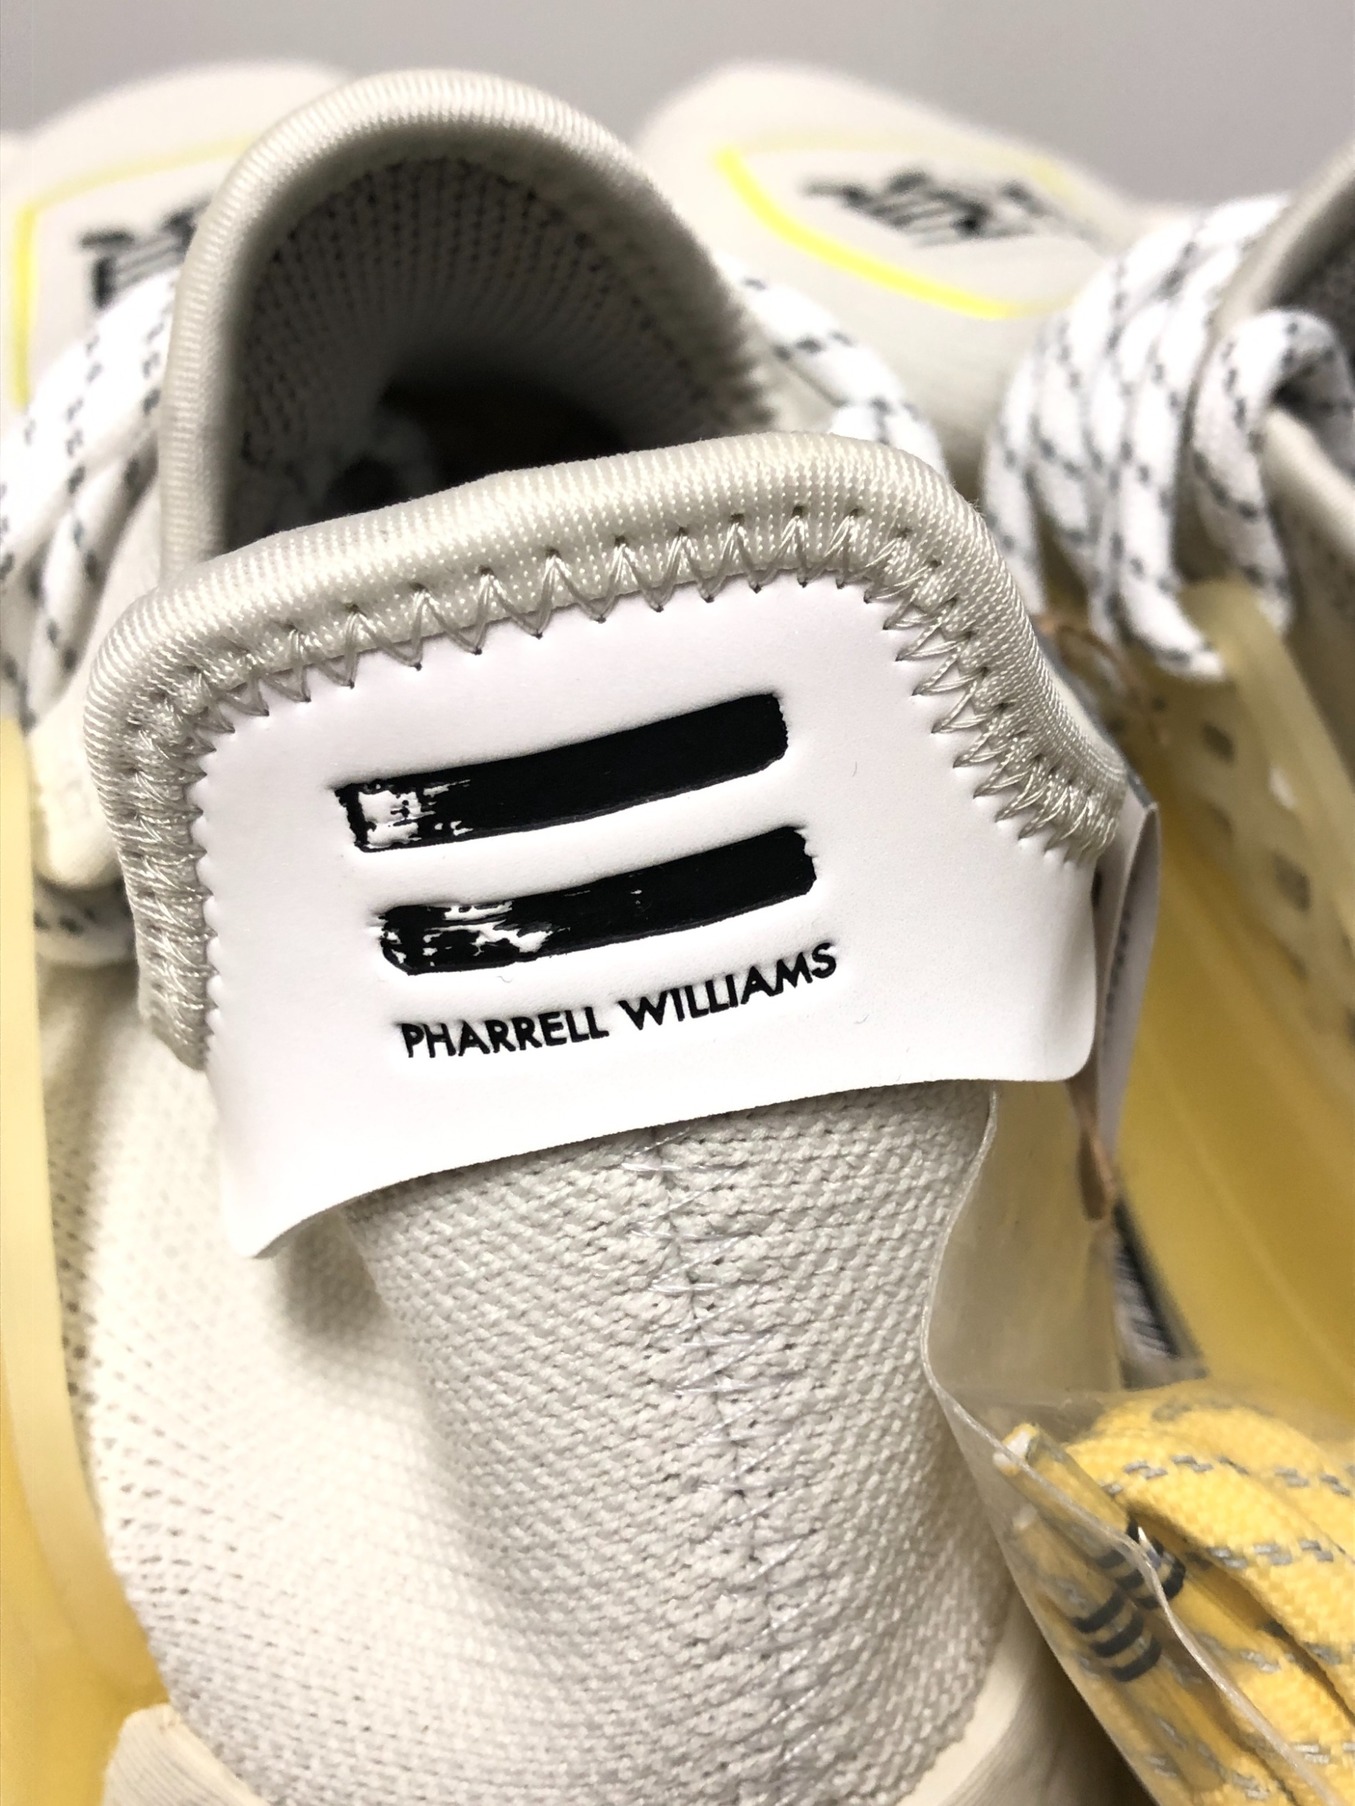 Pharrell Williams × adidas